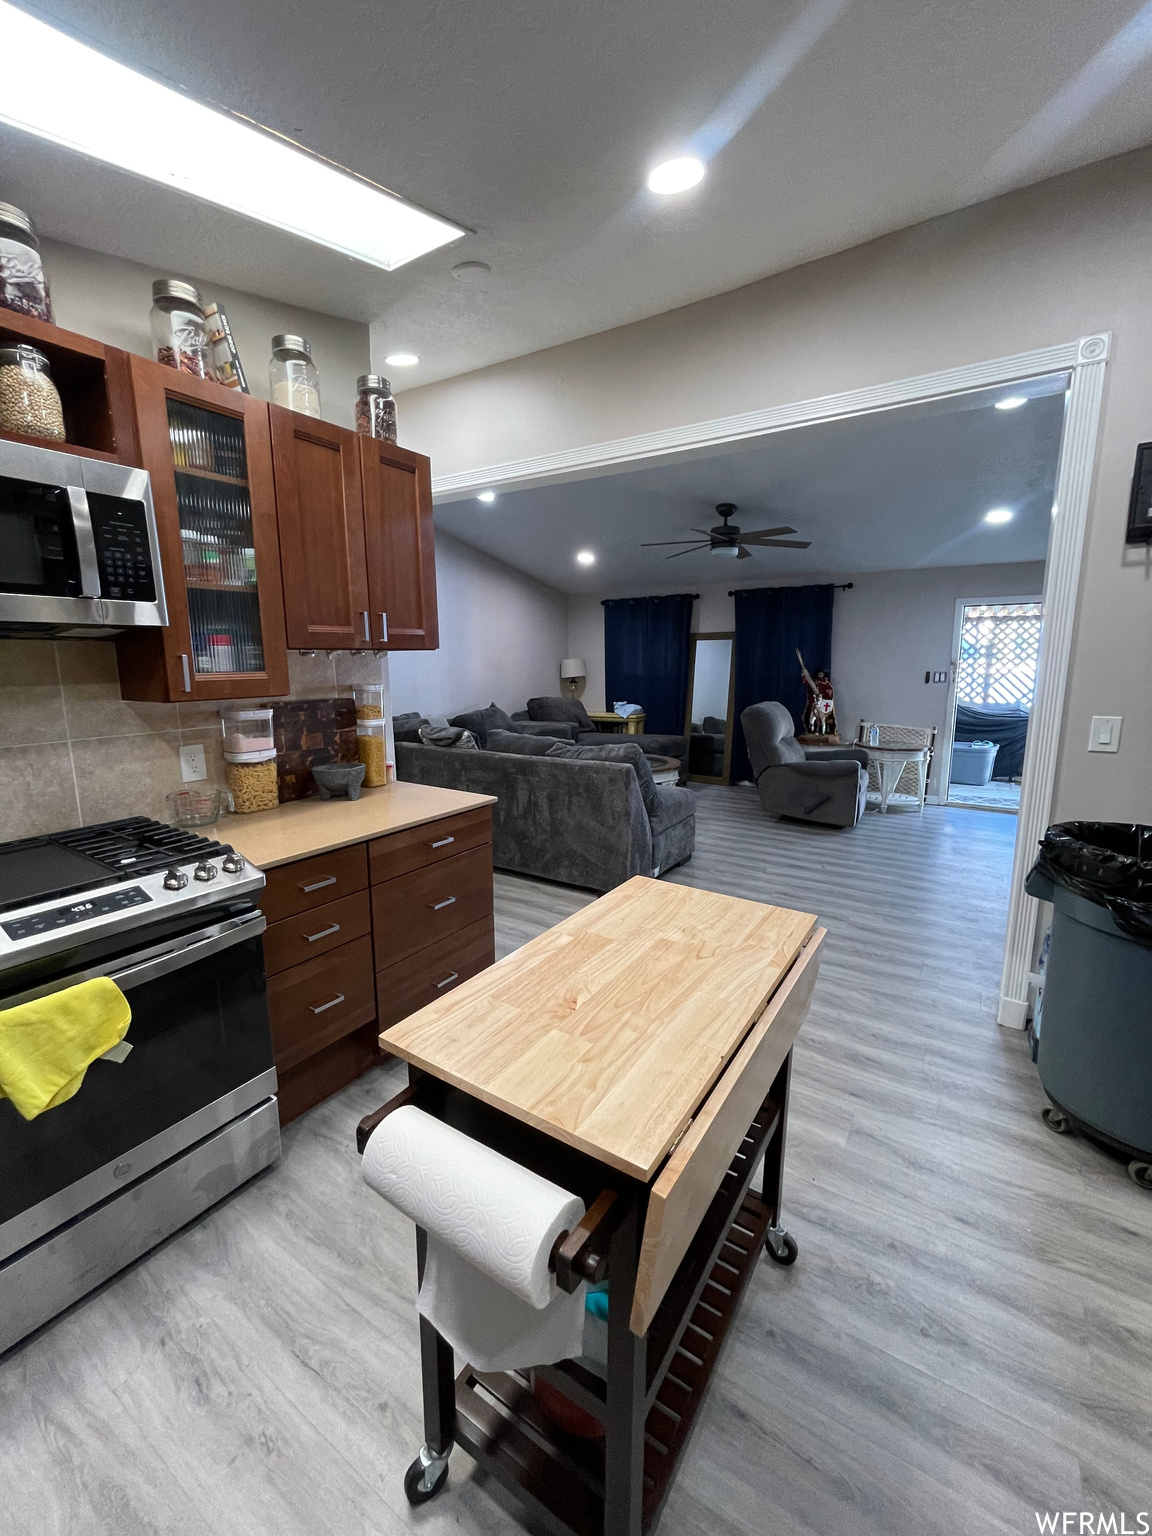 Kitchen featuring stainless steel appliances, ceiling fan, tasteful backsplash, and light hardwood / wood-style flooring